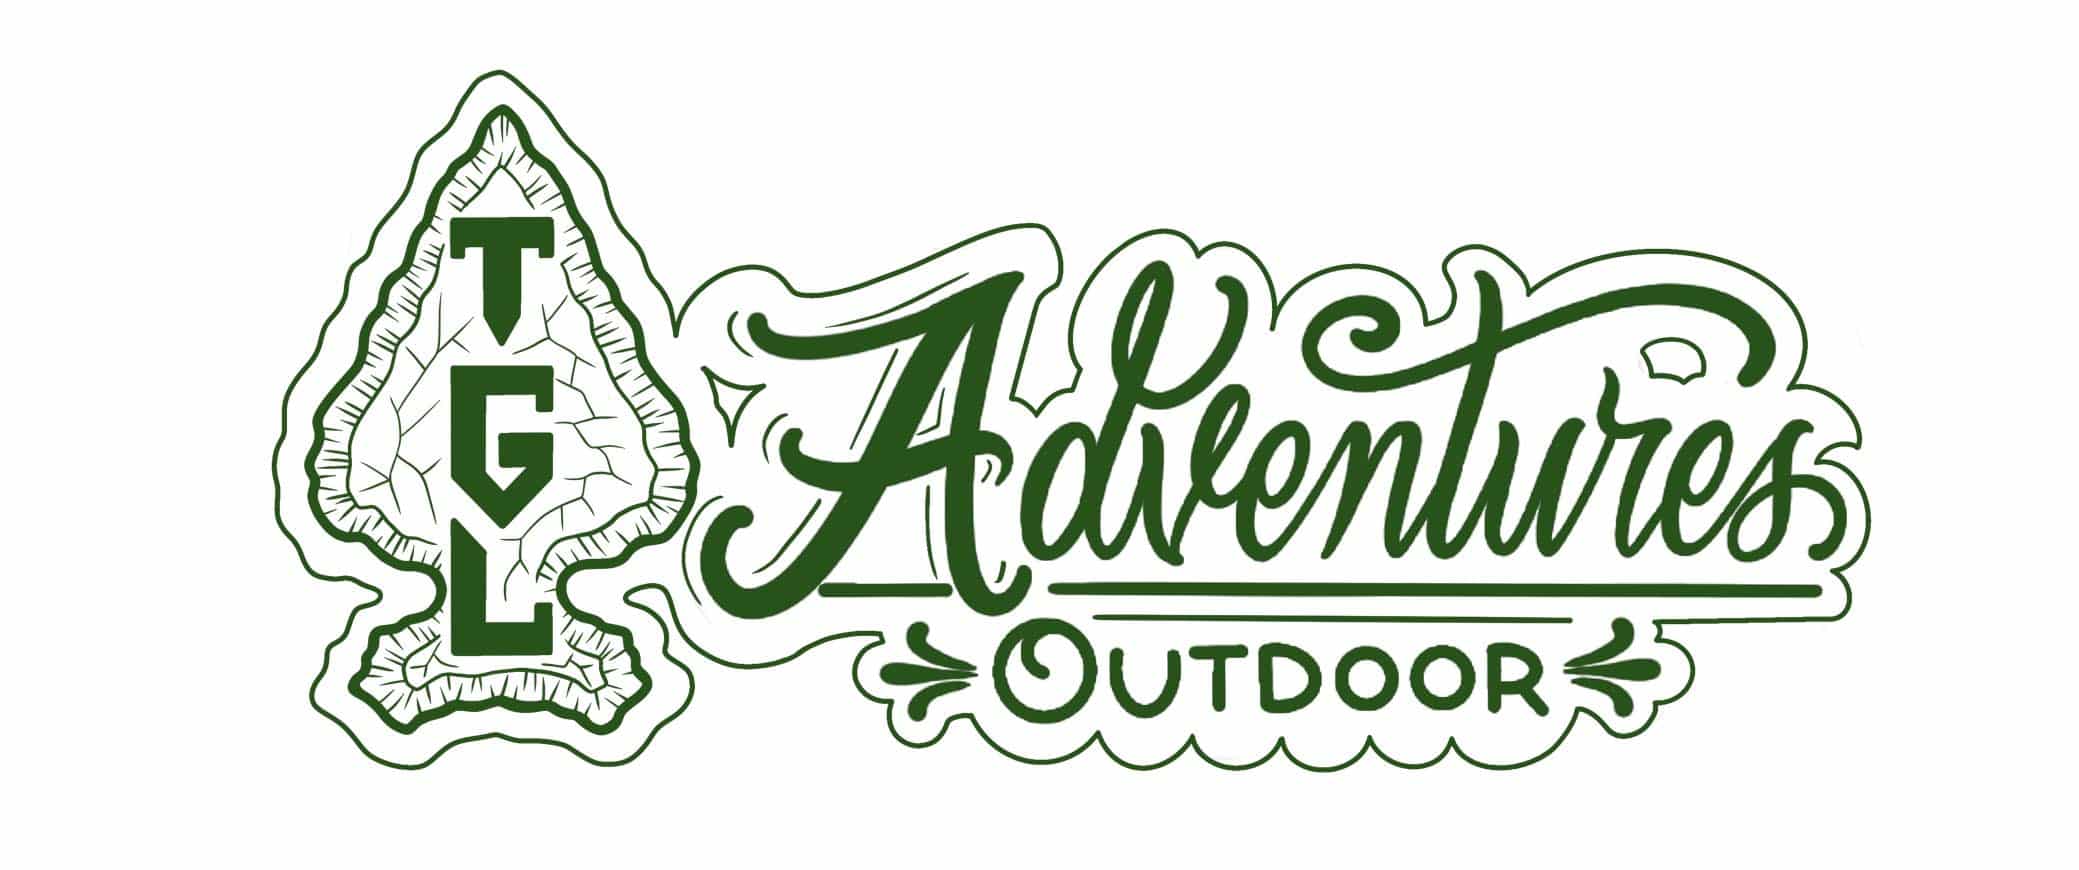 TGL Adventures Outdoor logo